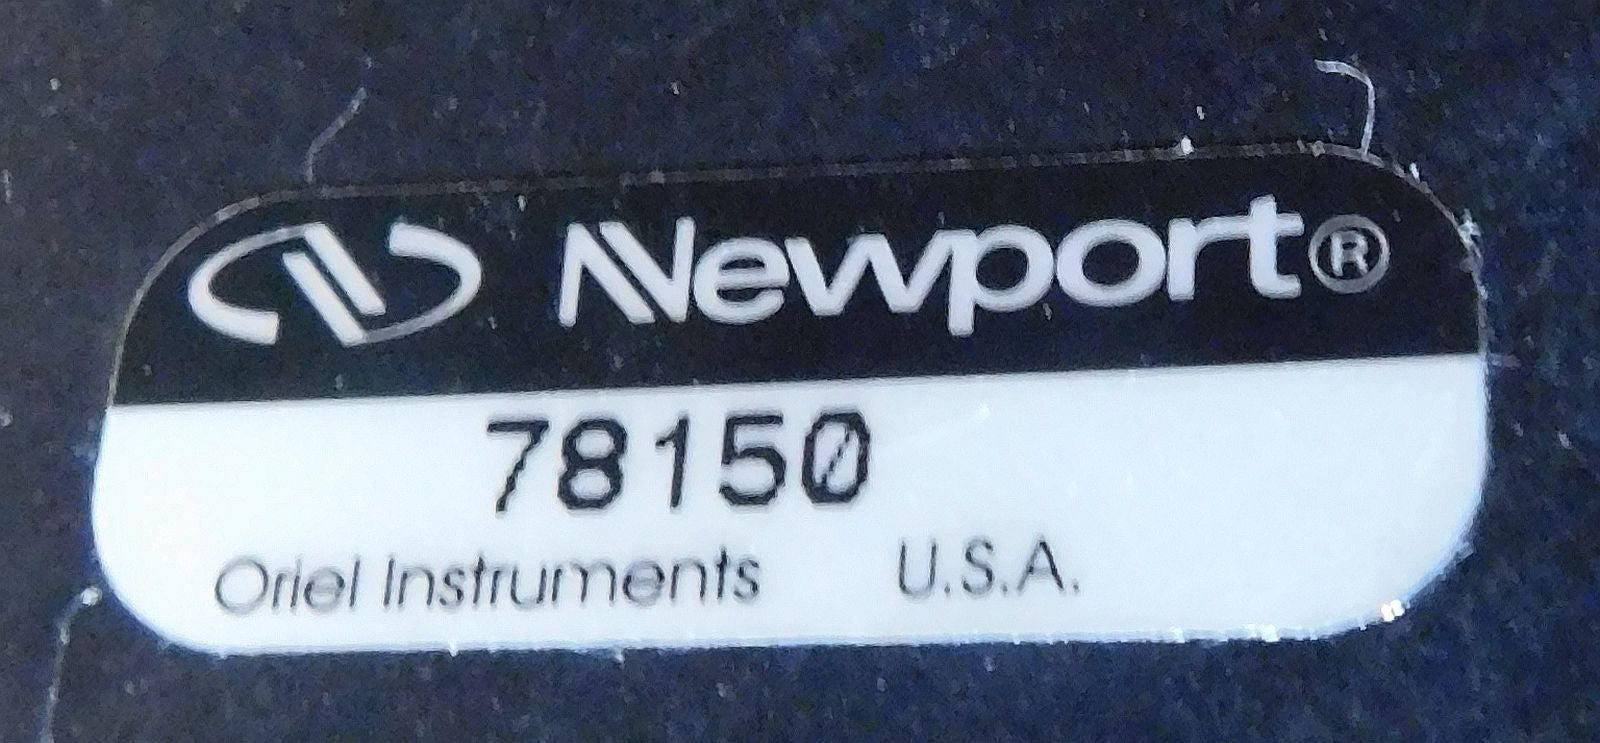 Newport (2) 77776 Fiber Focusing Assemblies & (1) 78150 Beam Splitter Used